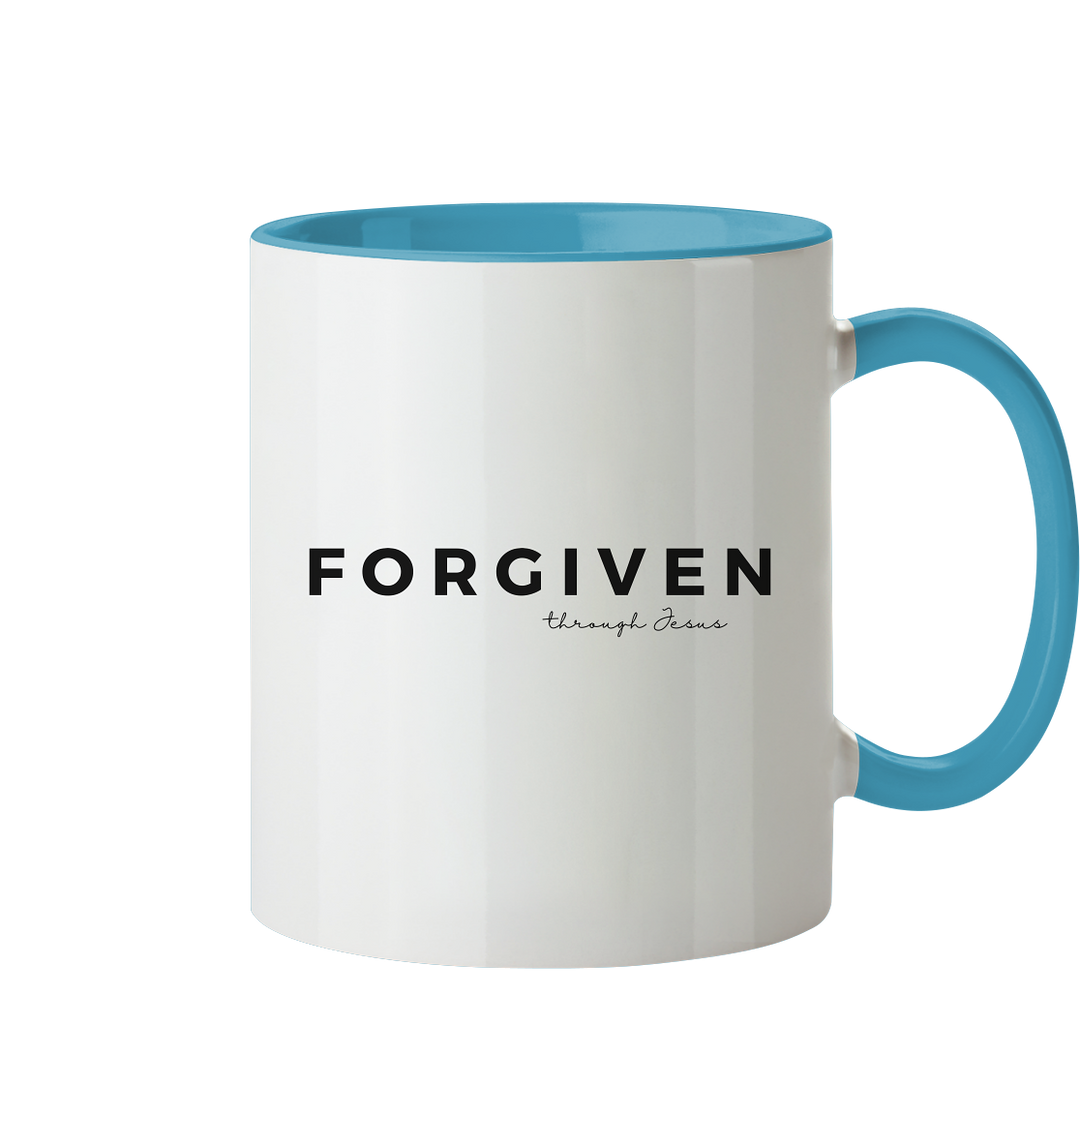 Forgiven - Tasse, zweifarbig